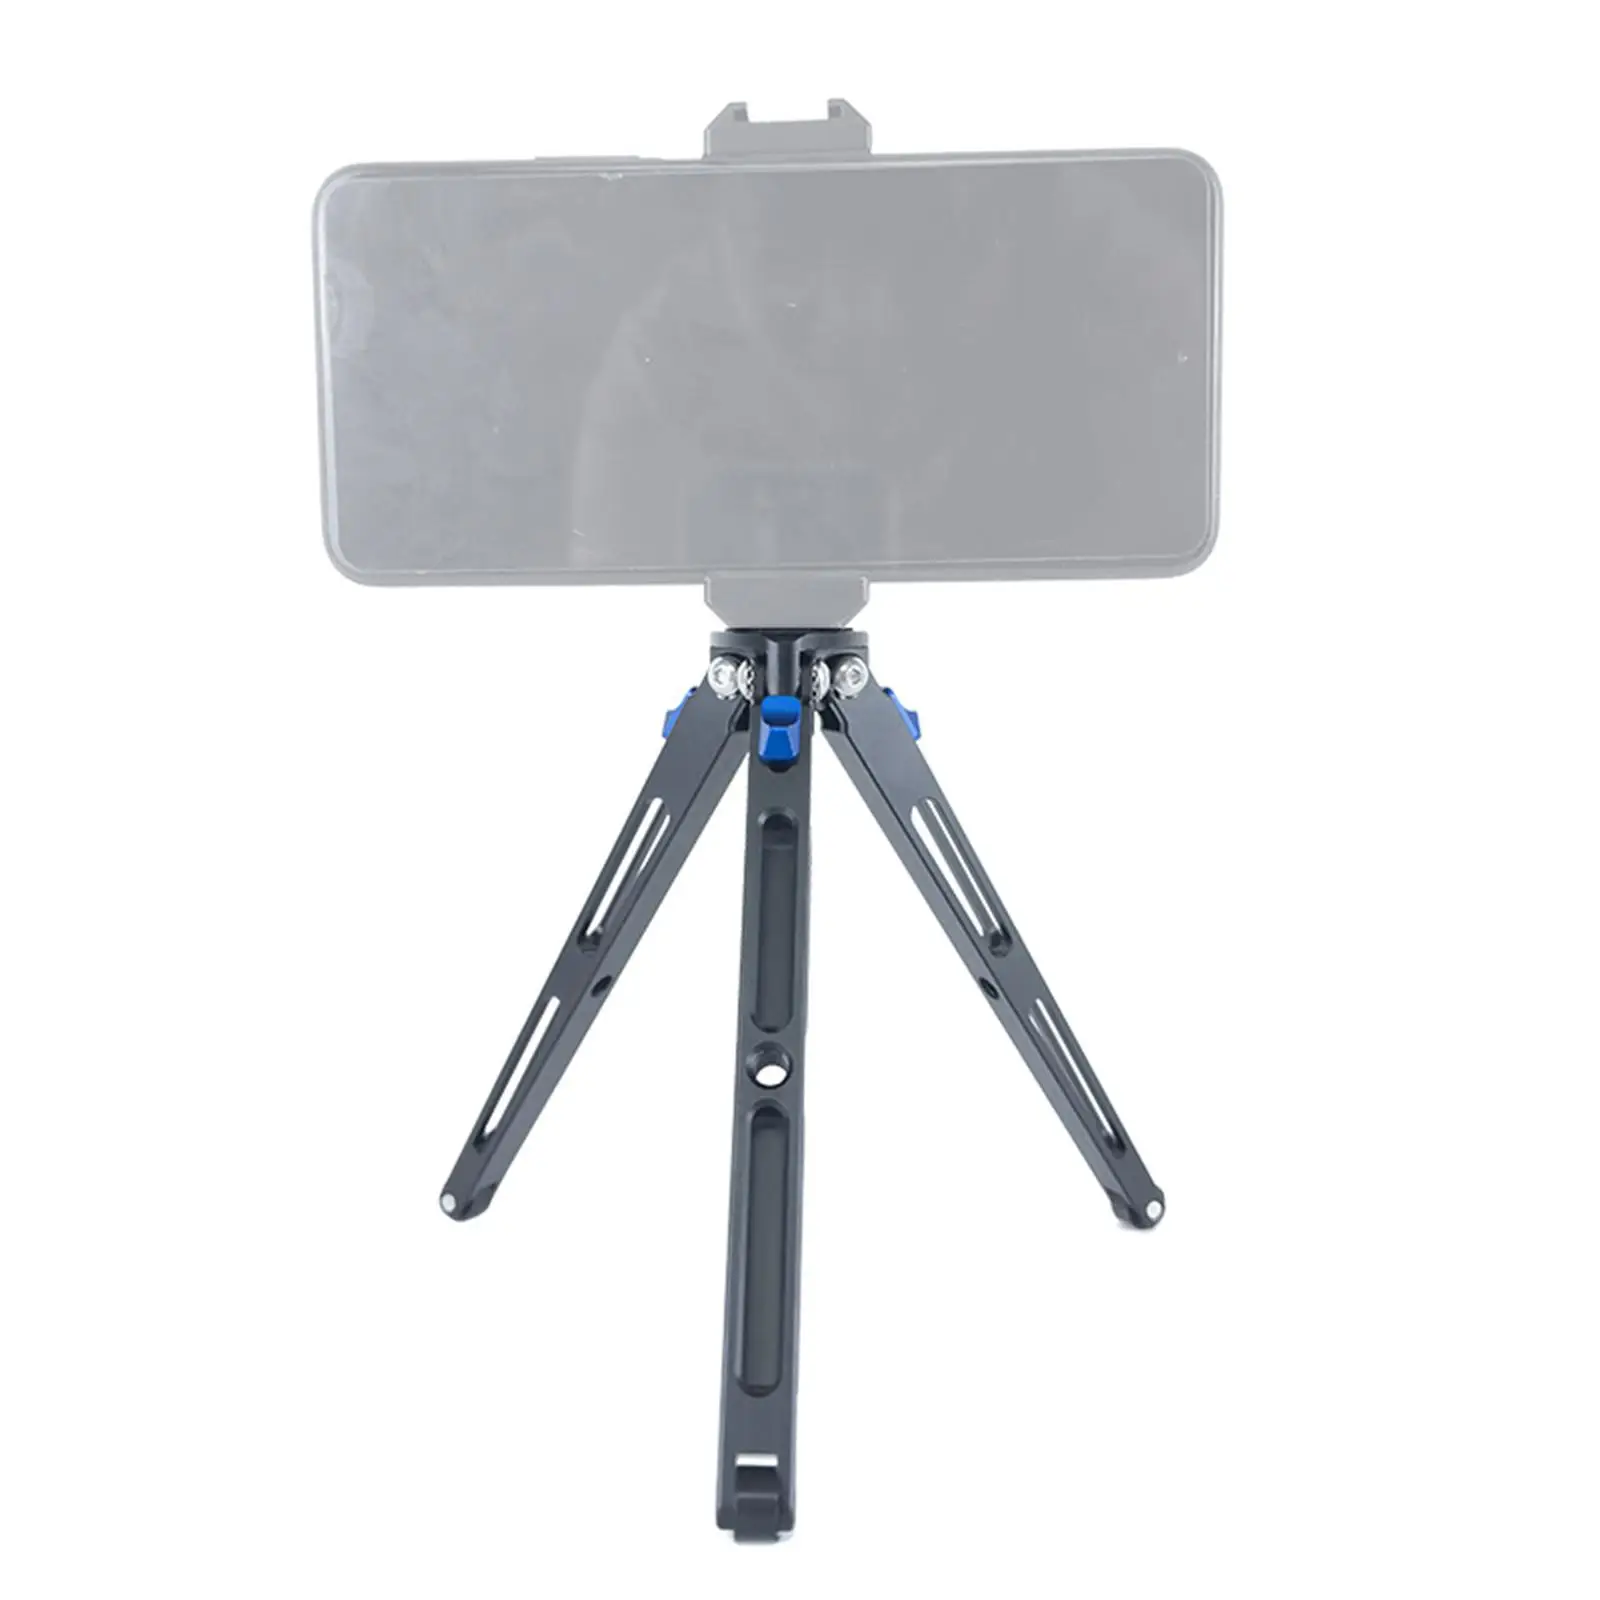 Mini Camera Tripod Portable Flexible Phone Tripod Stand for Video Recording Vlogging Smartphone Cellphones Photography